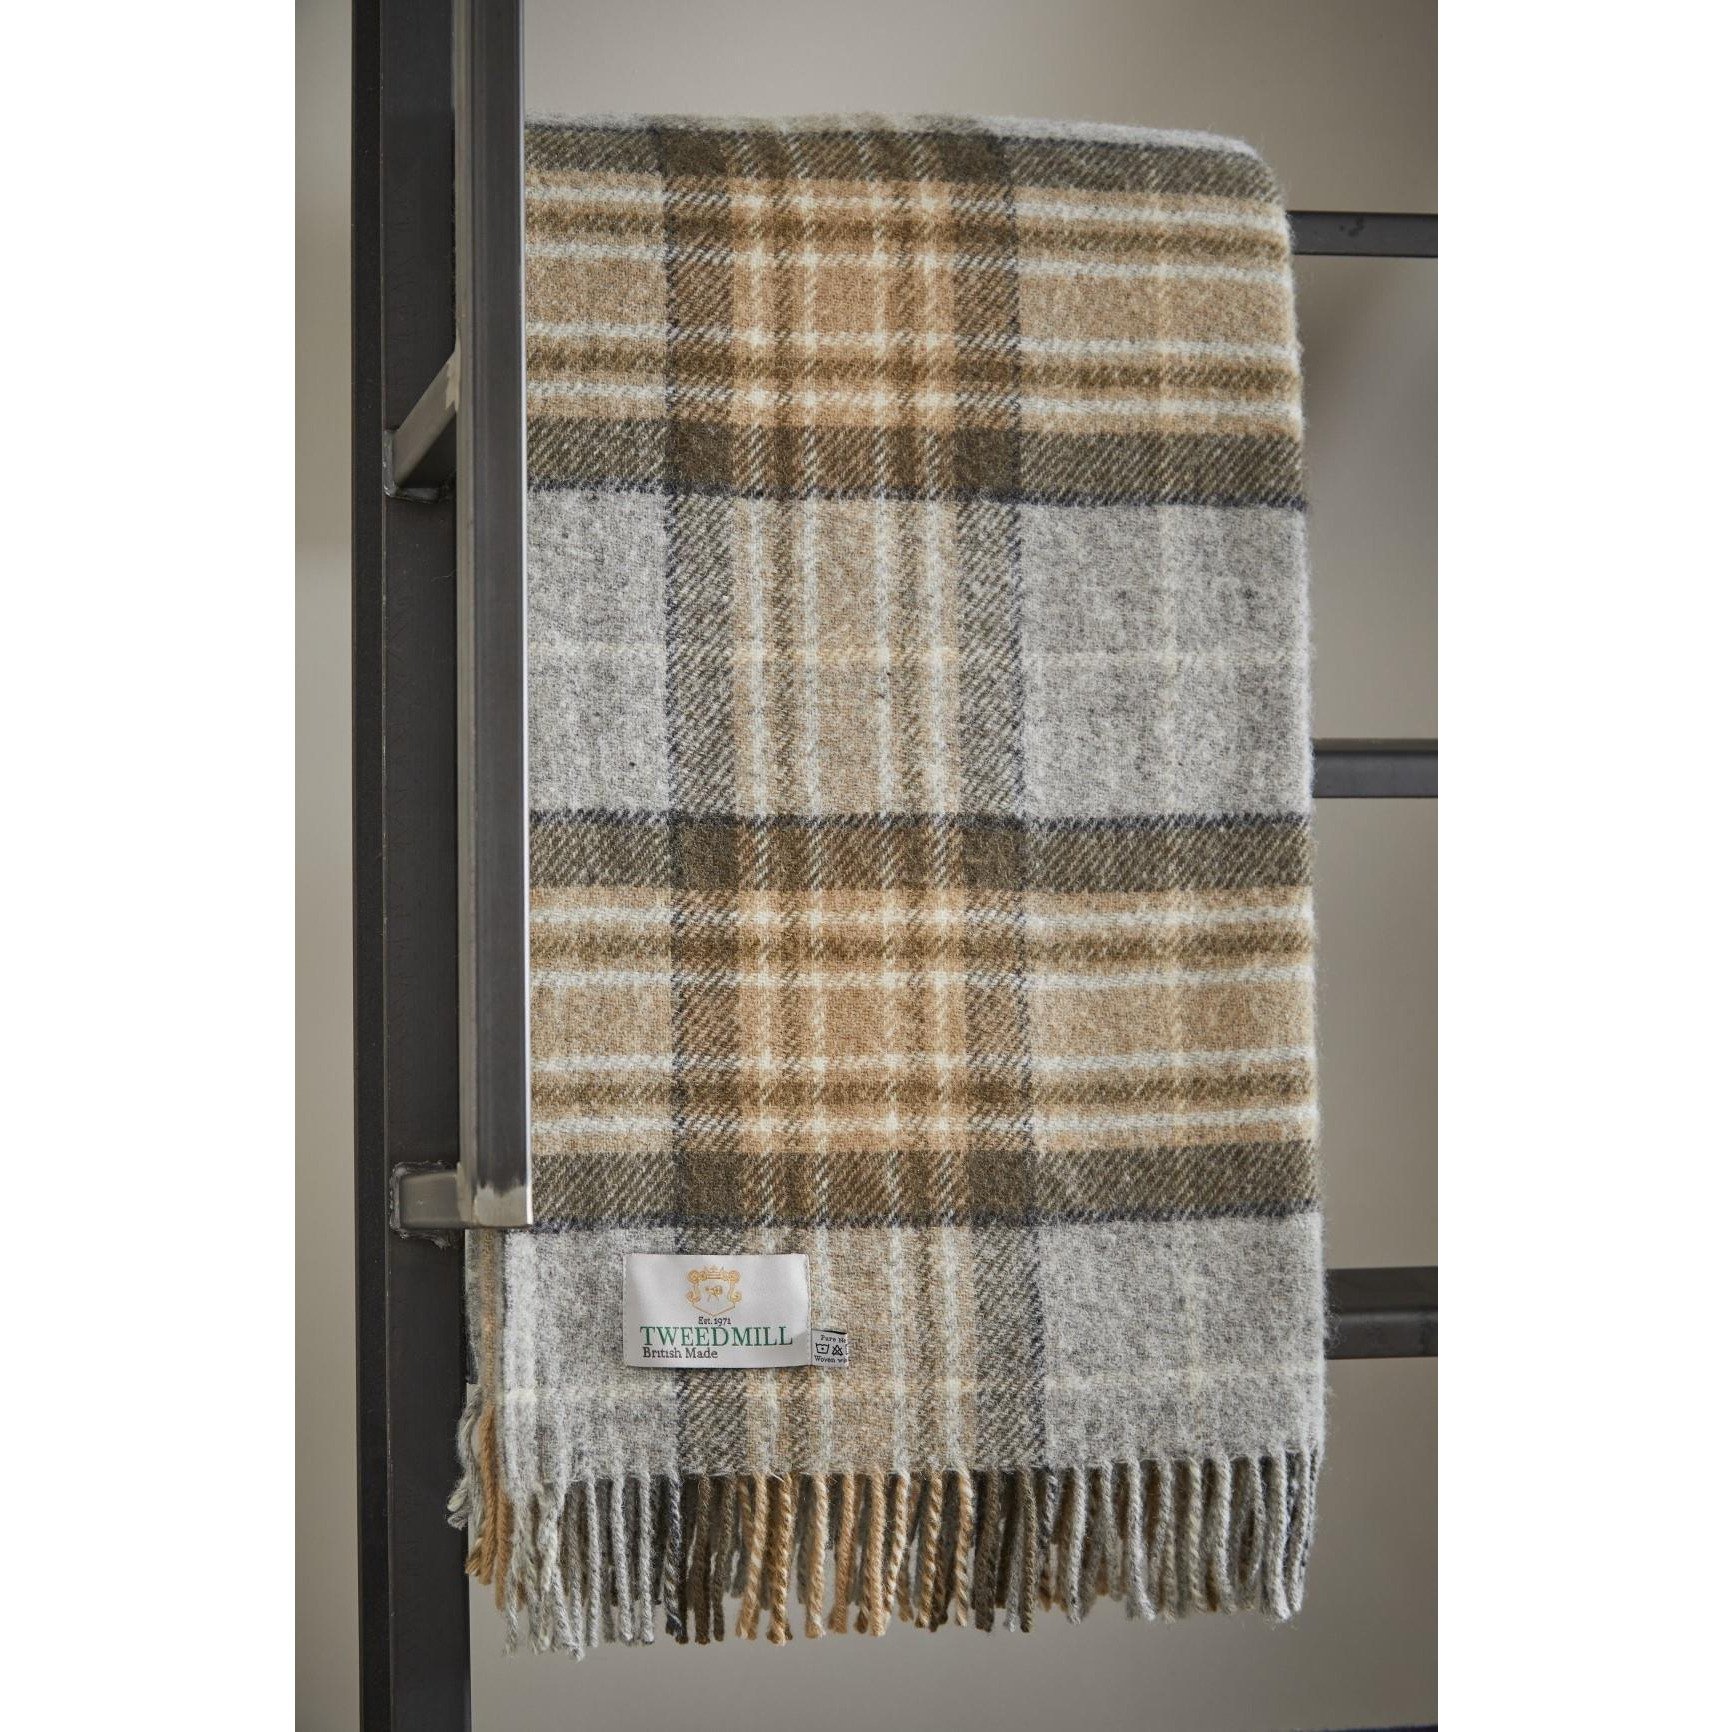 Tweedmill Tartan PNW McKellar Blanket/Throw Multi 150cm x 183cm 100% New Wool Made in the UK - image 1